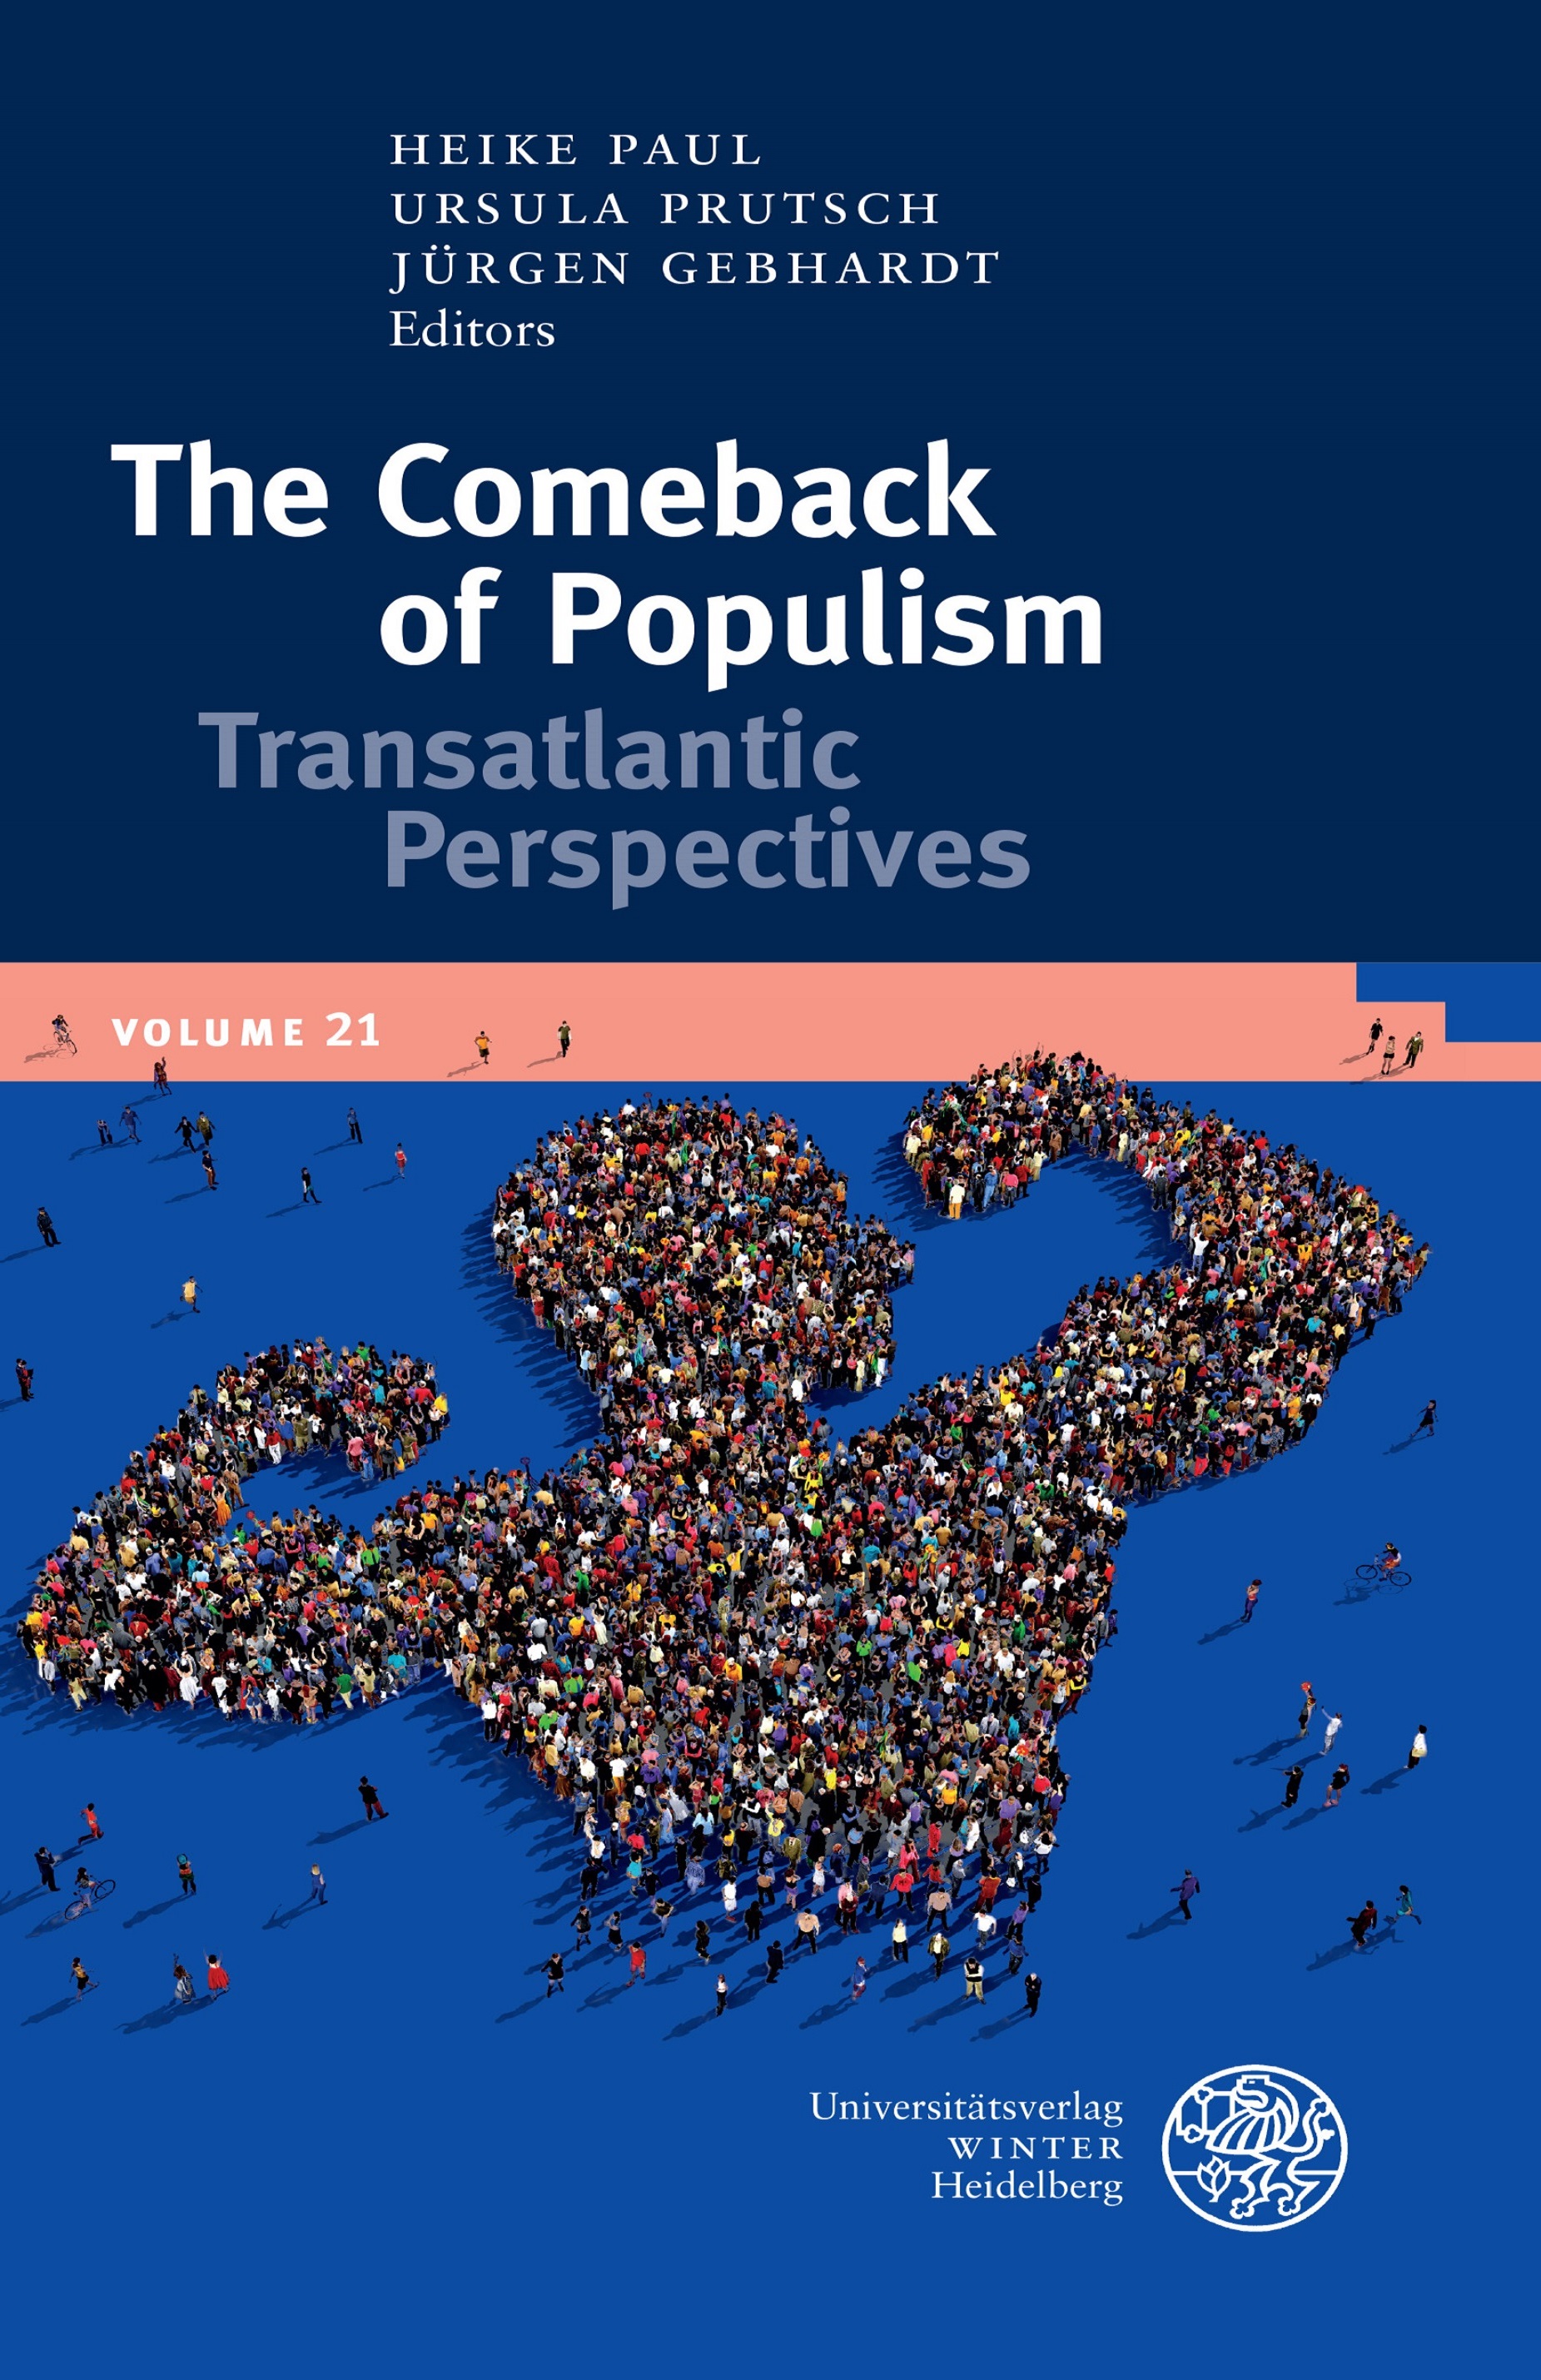 BAA publication Vol. 21 The Comeback of Populism